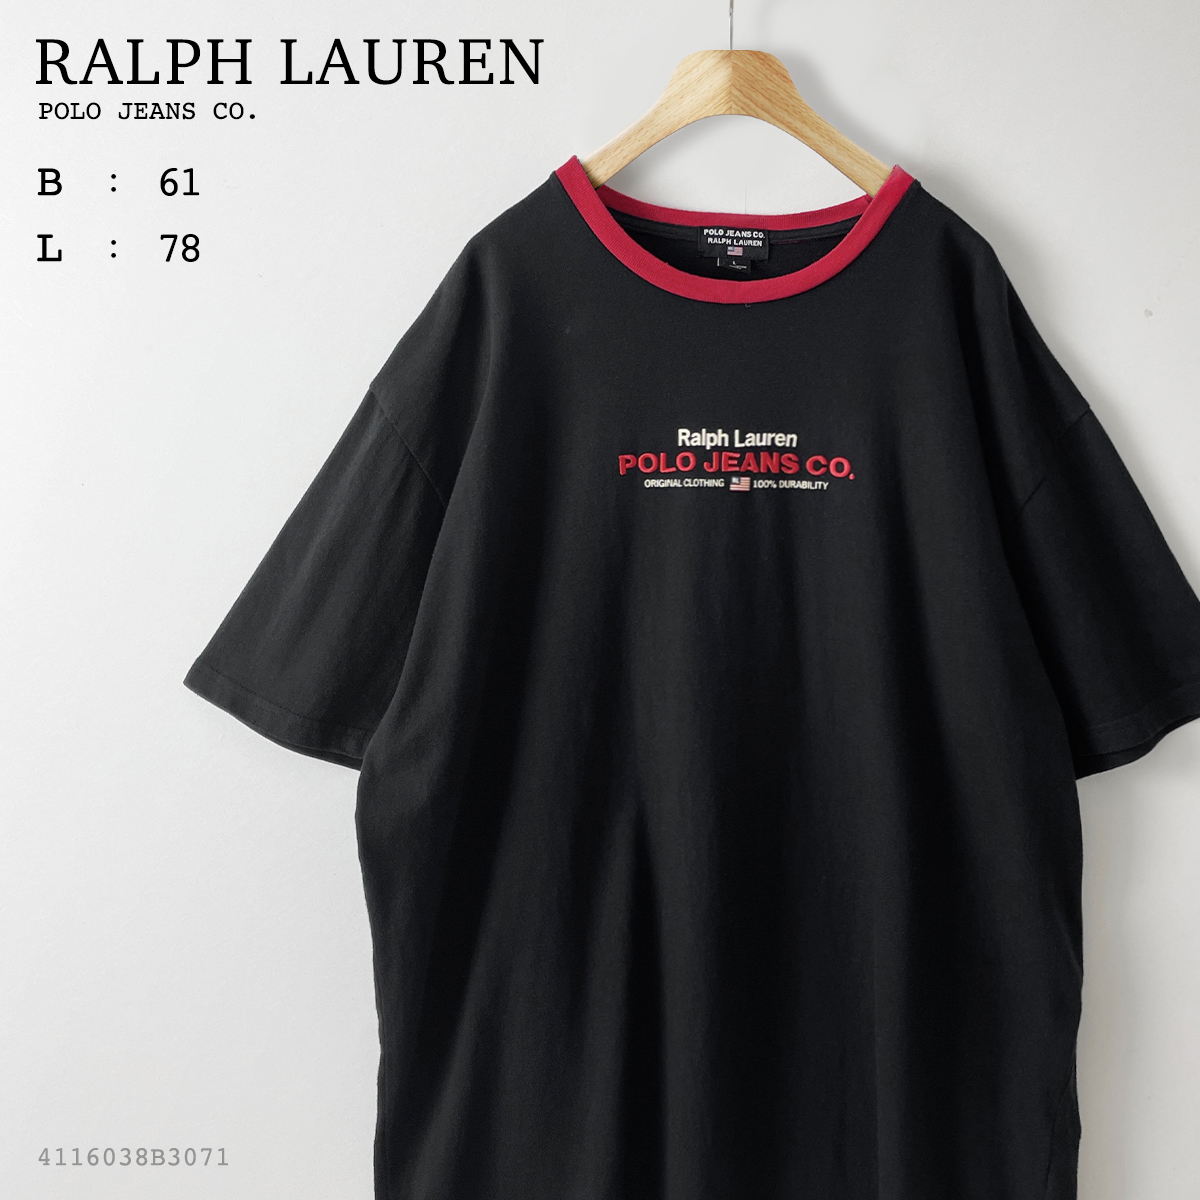 RALPH LAUREN メンズ XXL 2XL 相当 ポロジーンズ 半袖 ボックス ロゴ 刺繍 リンガー Tシャツ 黒 ブラック 赤 レッド 丸首 オーバーサイズ L